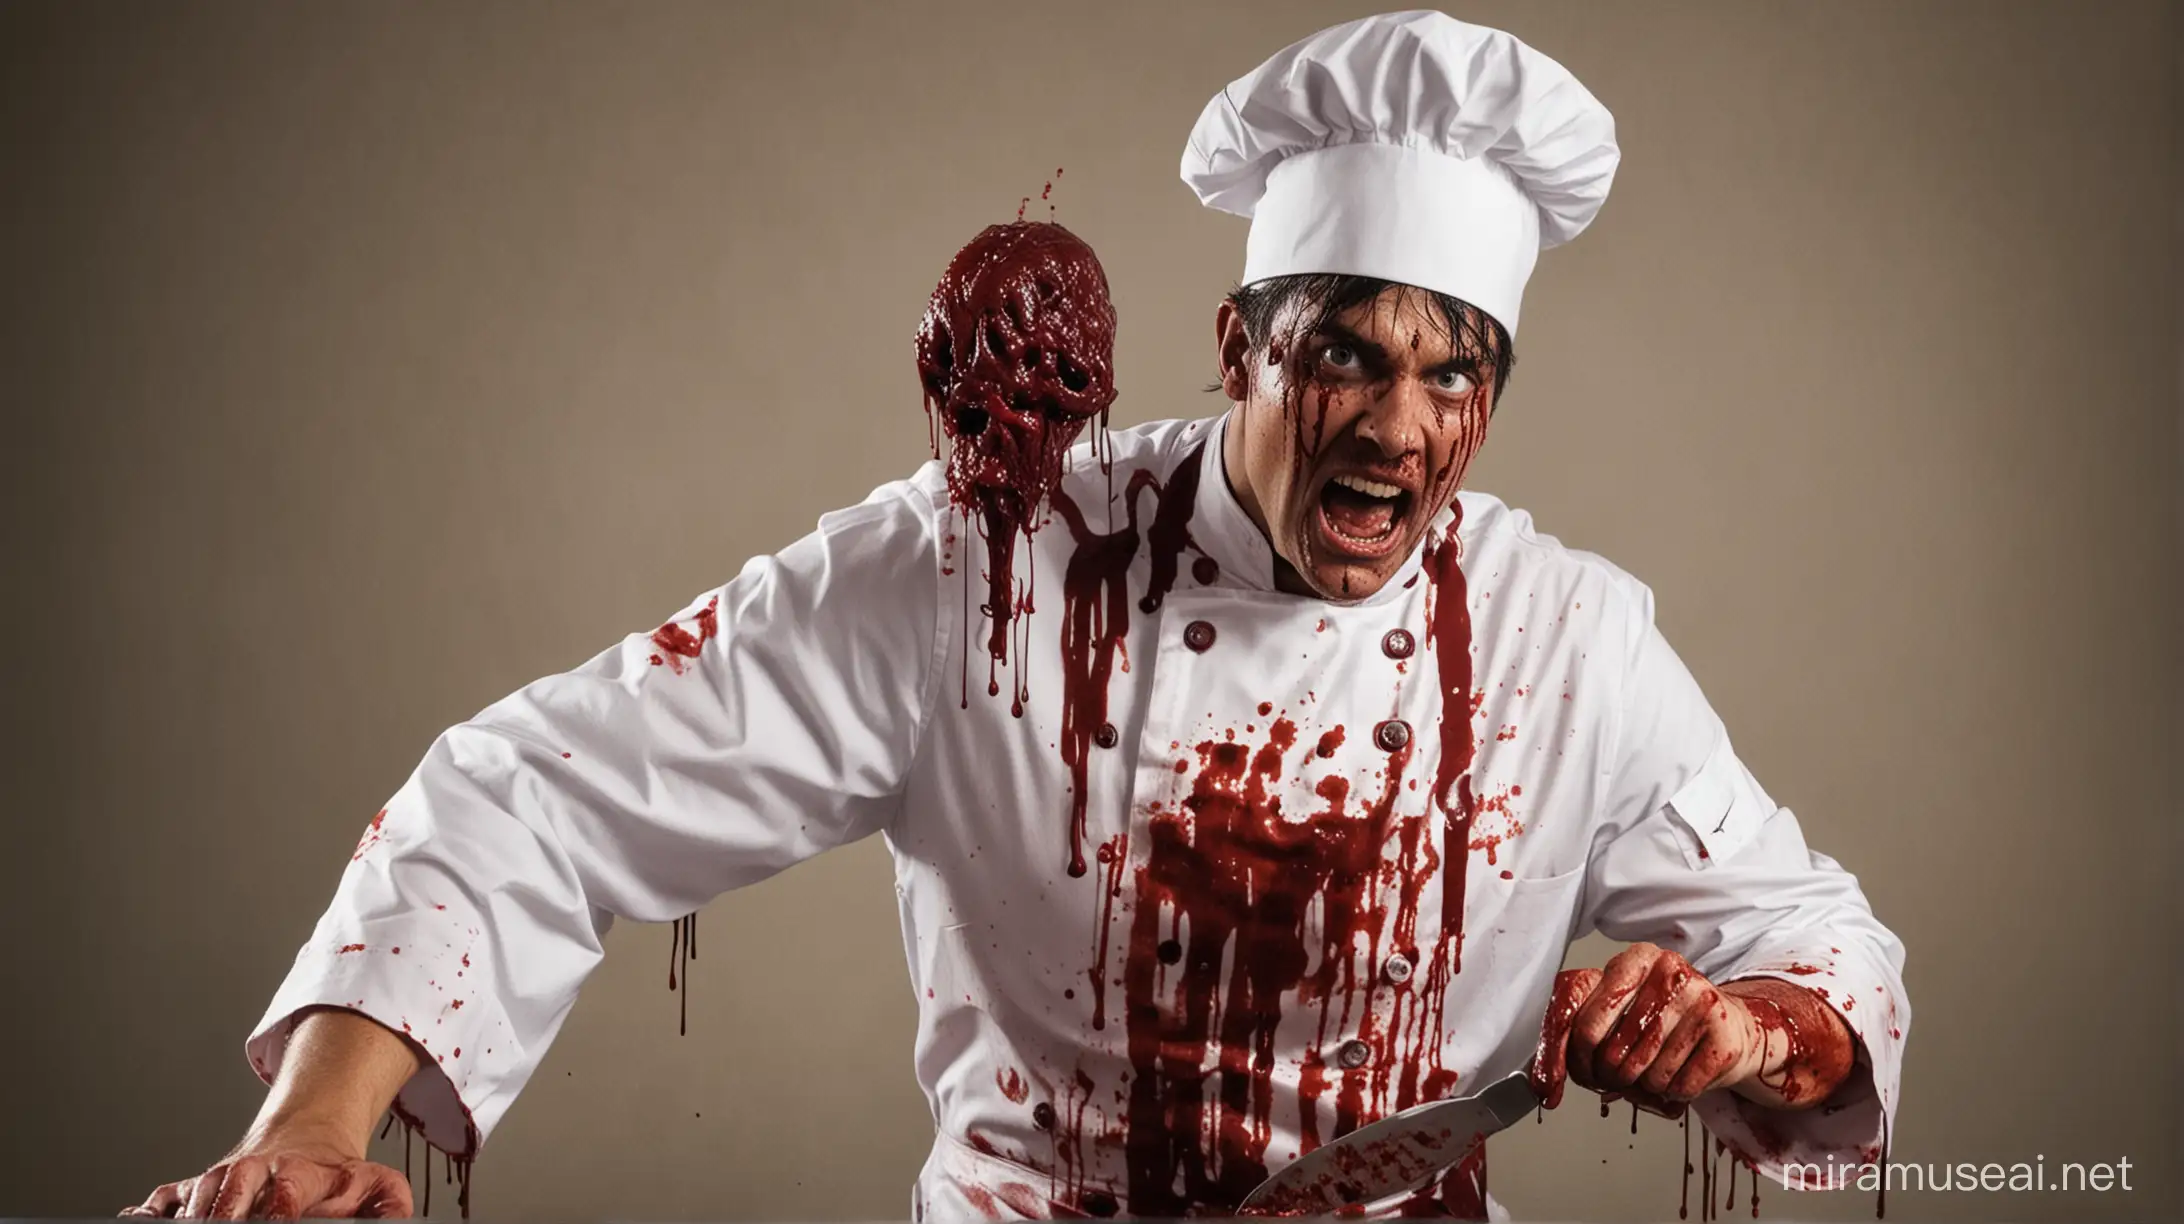 Spooky Cook Horror Scene with Blood Splatter